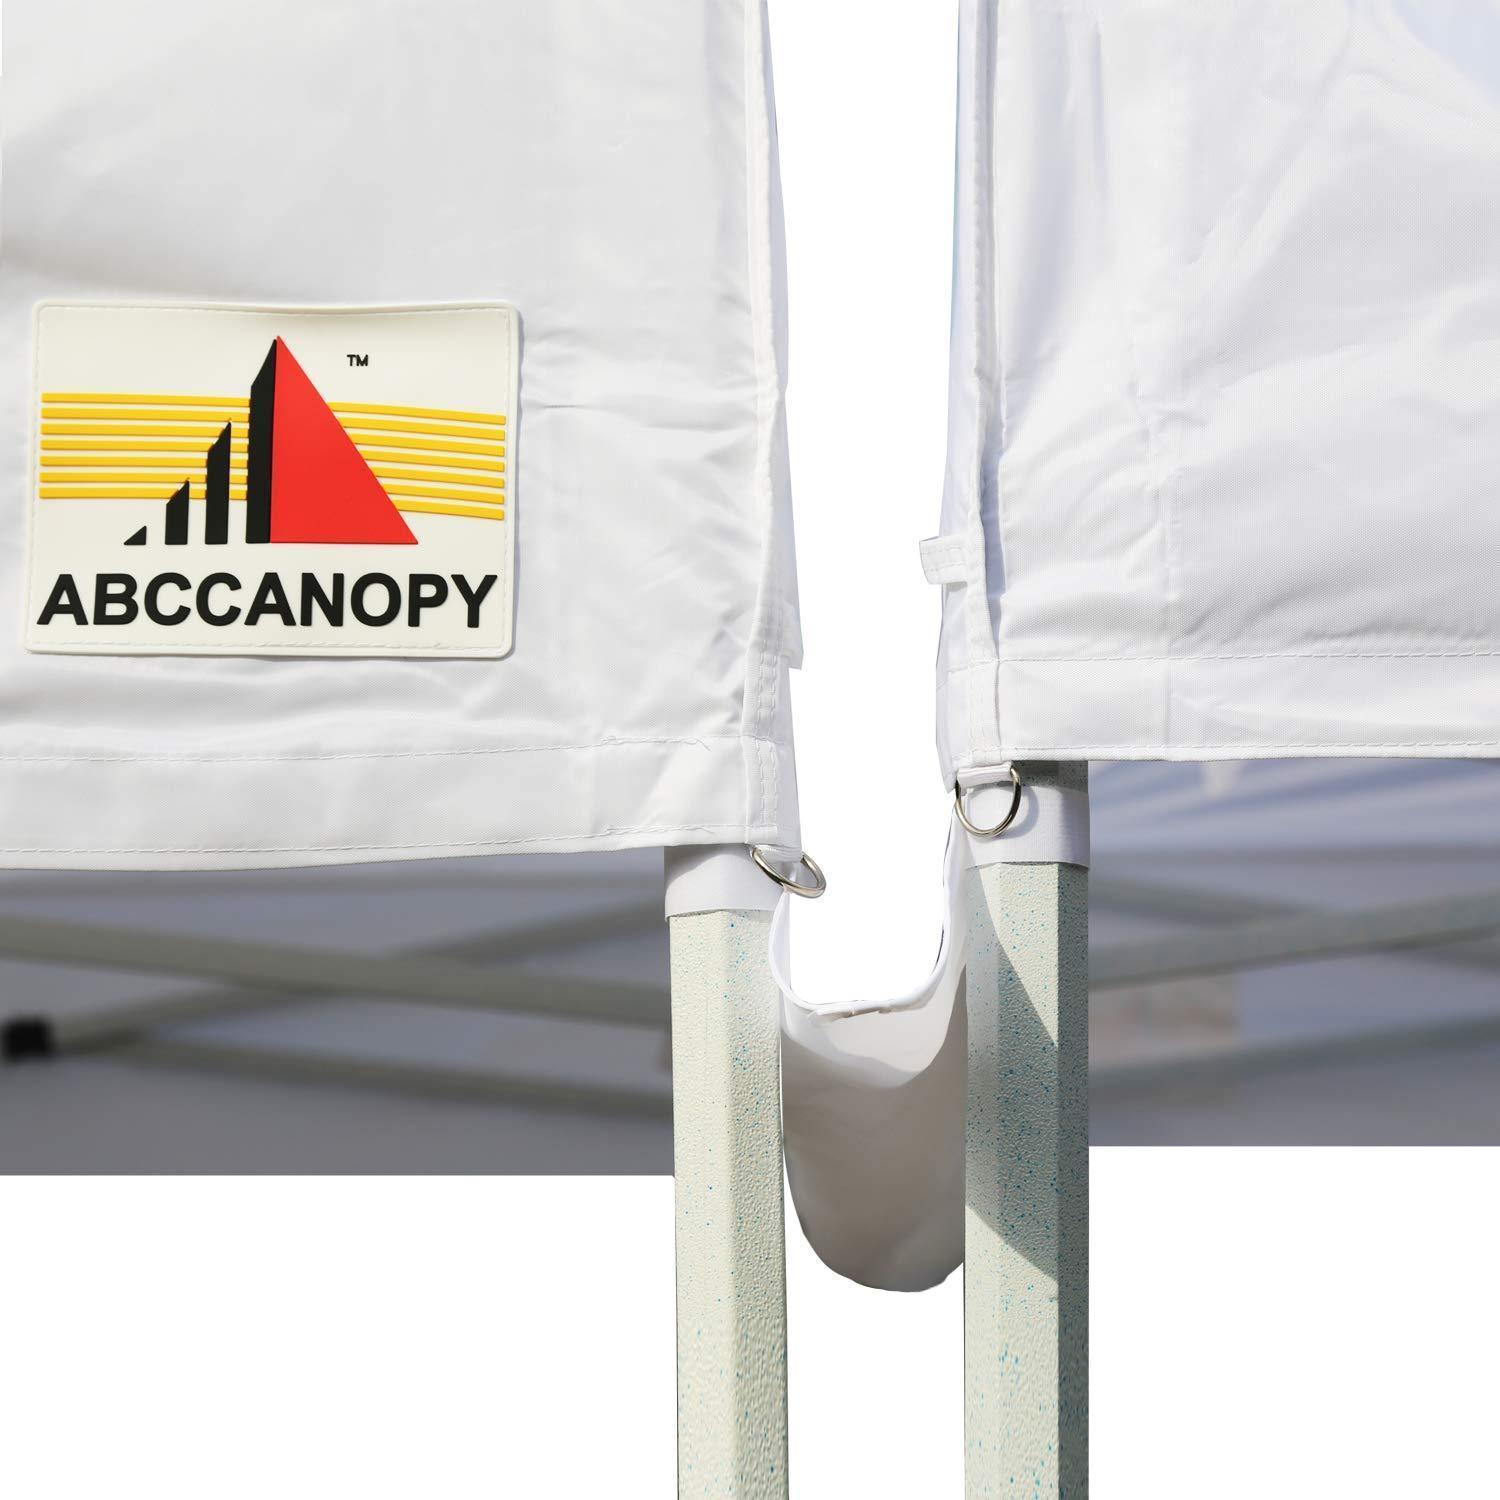 10 Foot Canopy Rain Gutter - ABC-CANOPY